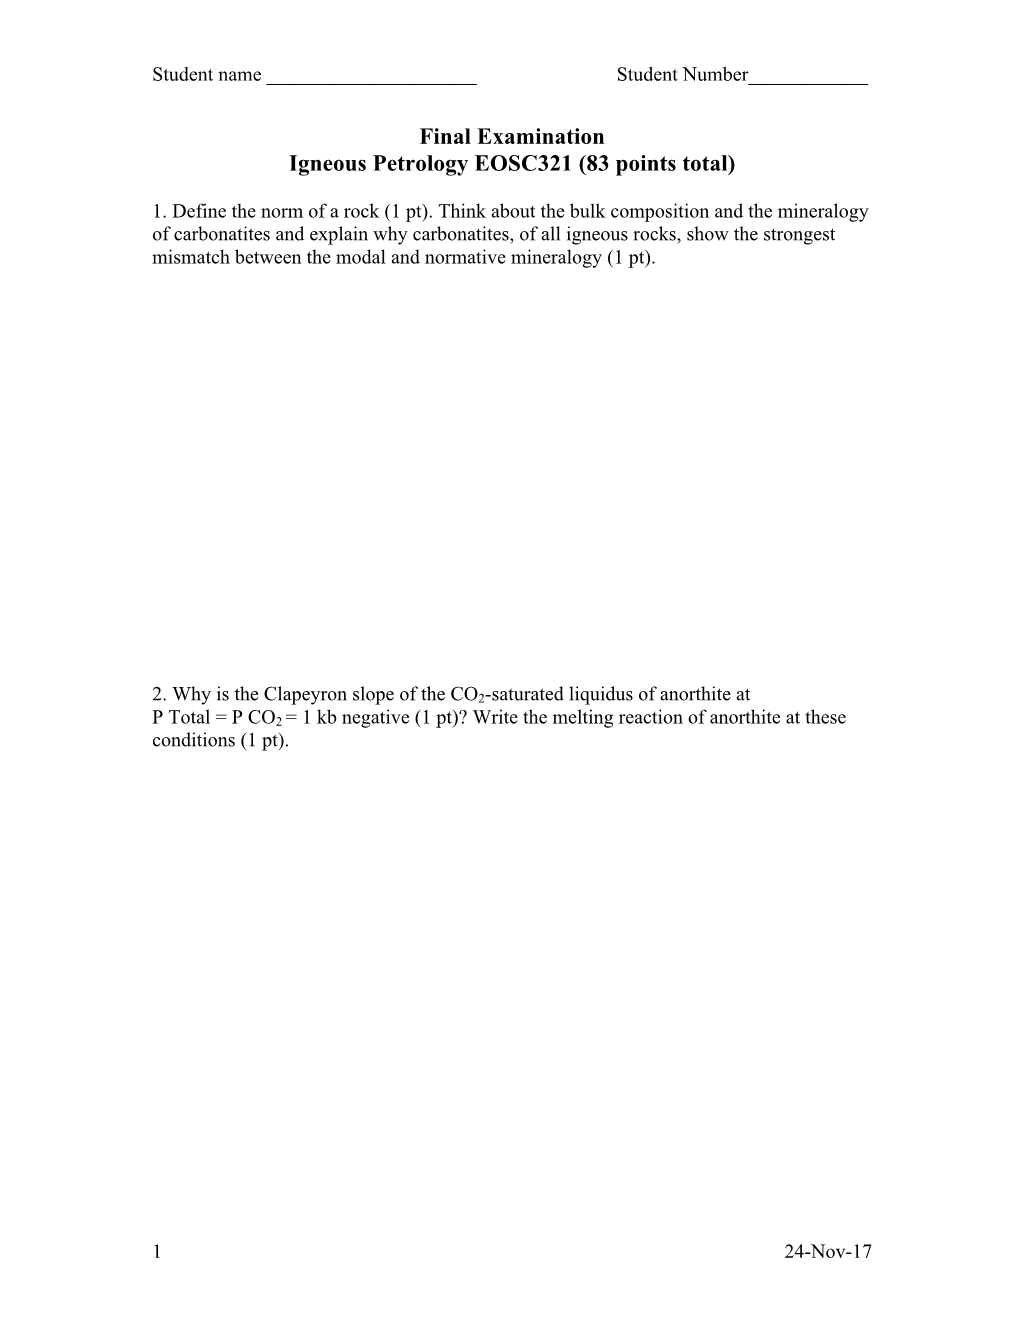 Final Examination Igneous Petrology EOSC321 (83 Points Total)